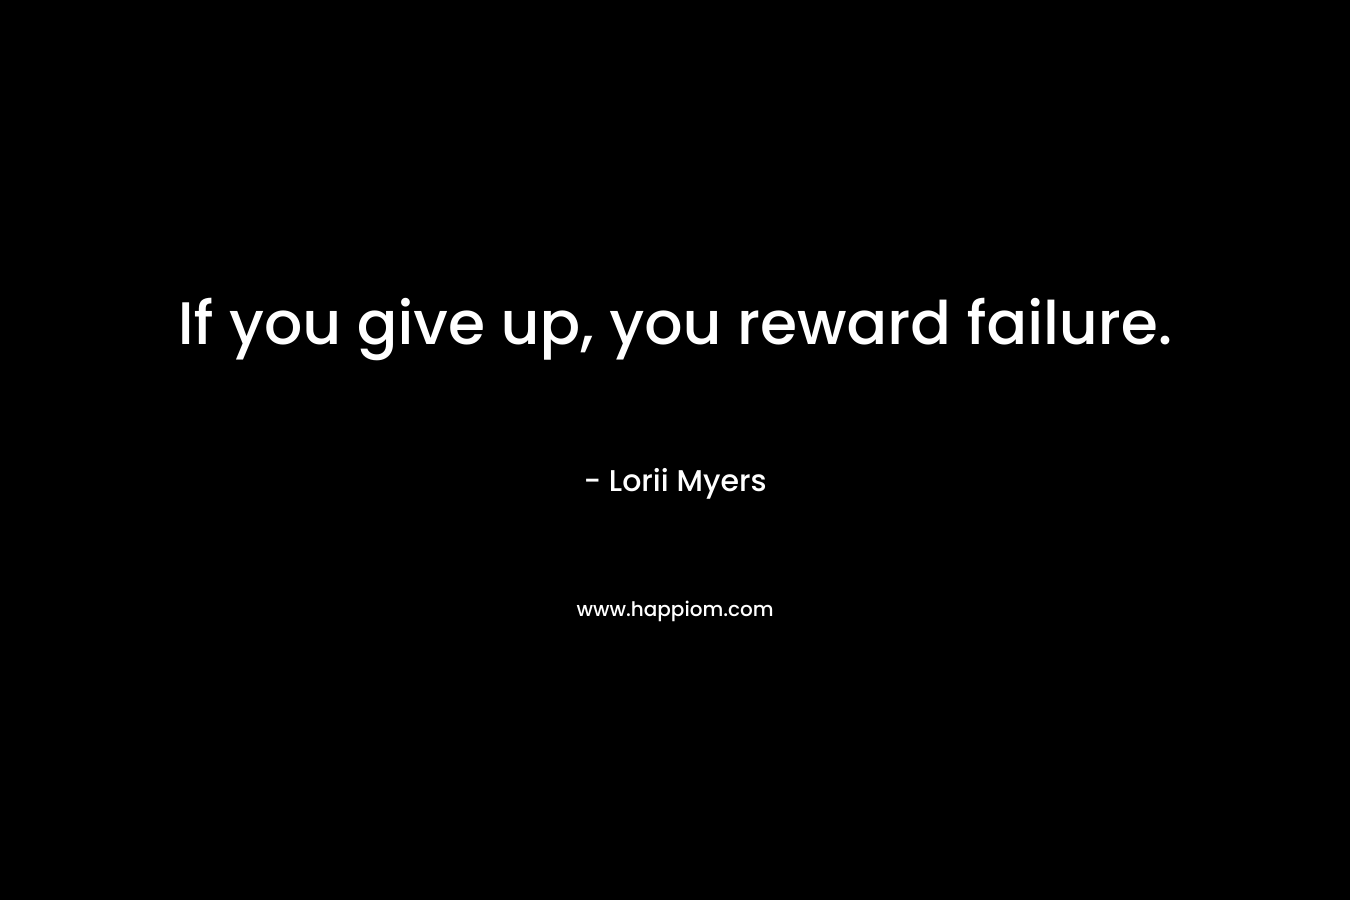 If you give up, you reward failure.